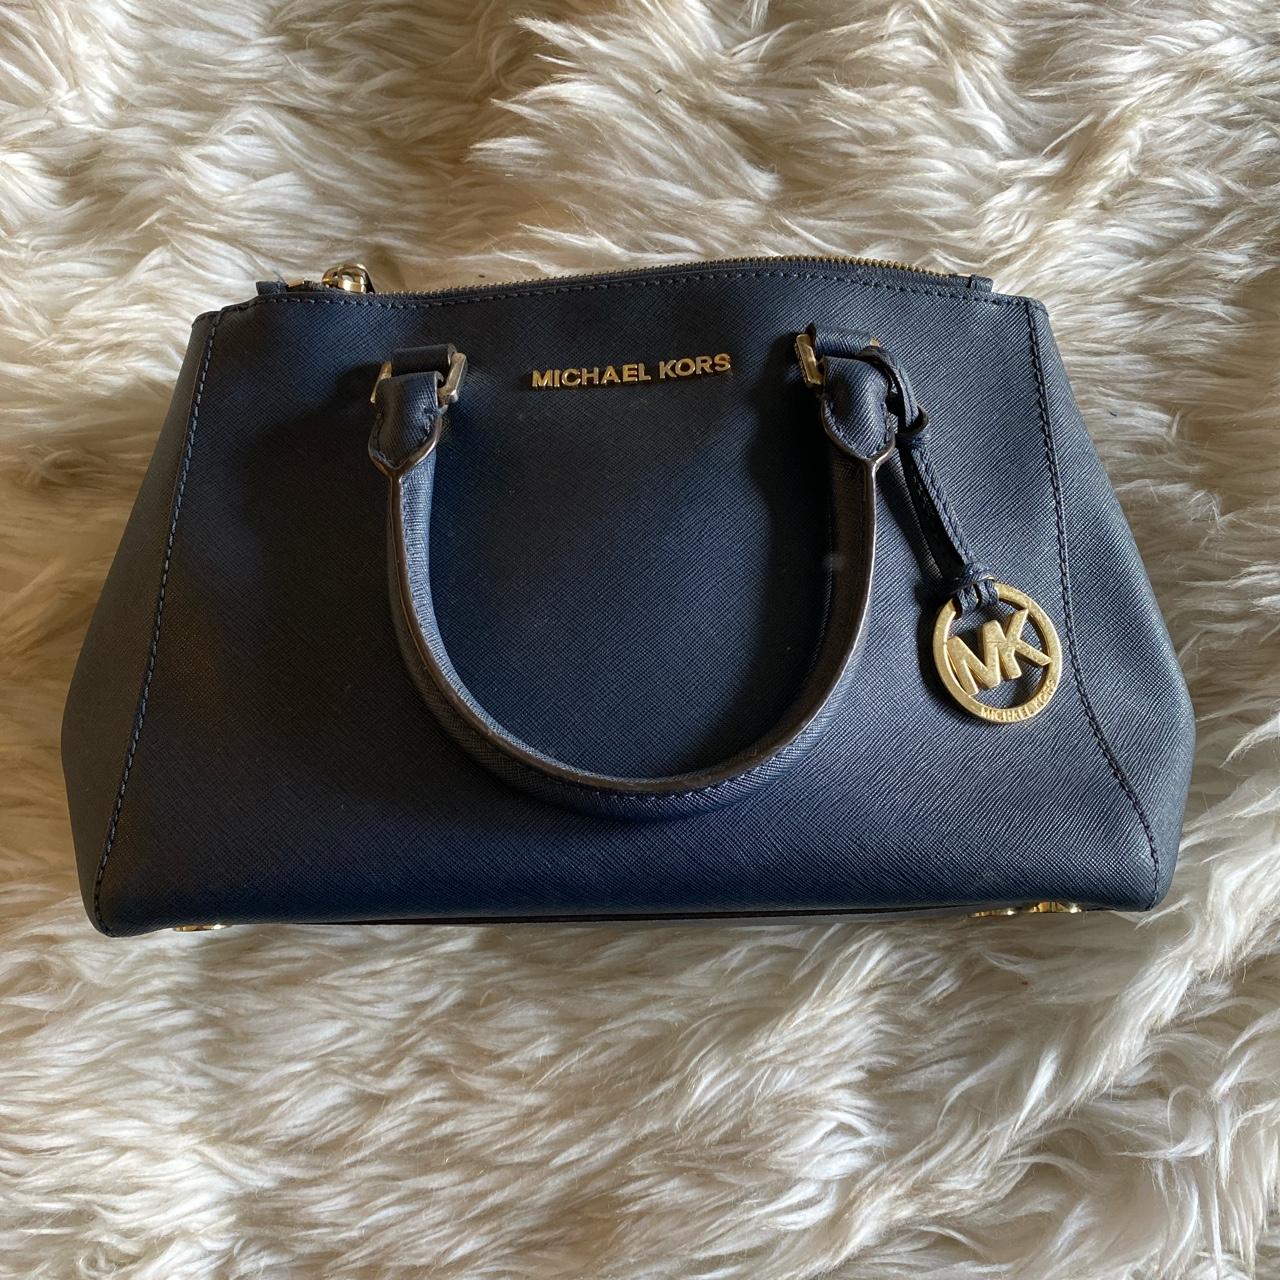 MICHAEL KORS KIP Pebble Leather White Navy Blue HOBO Bag Purse Handbag  Floral | eBay